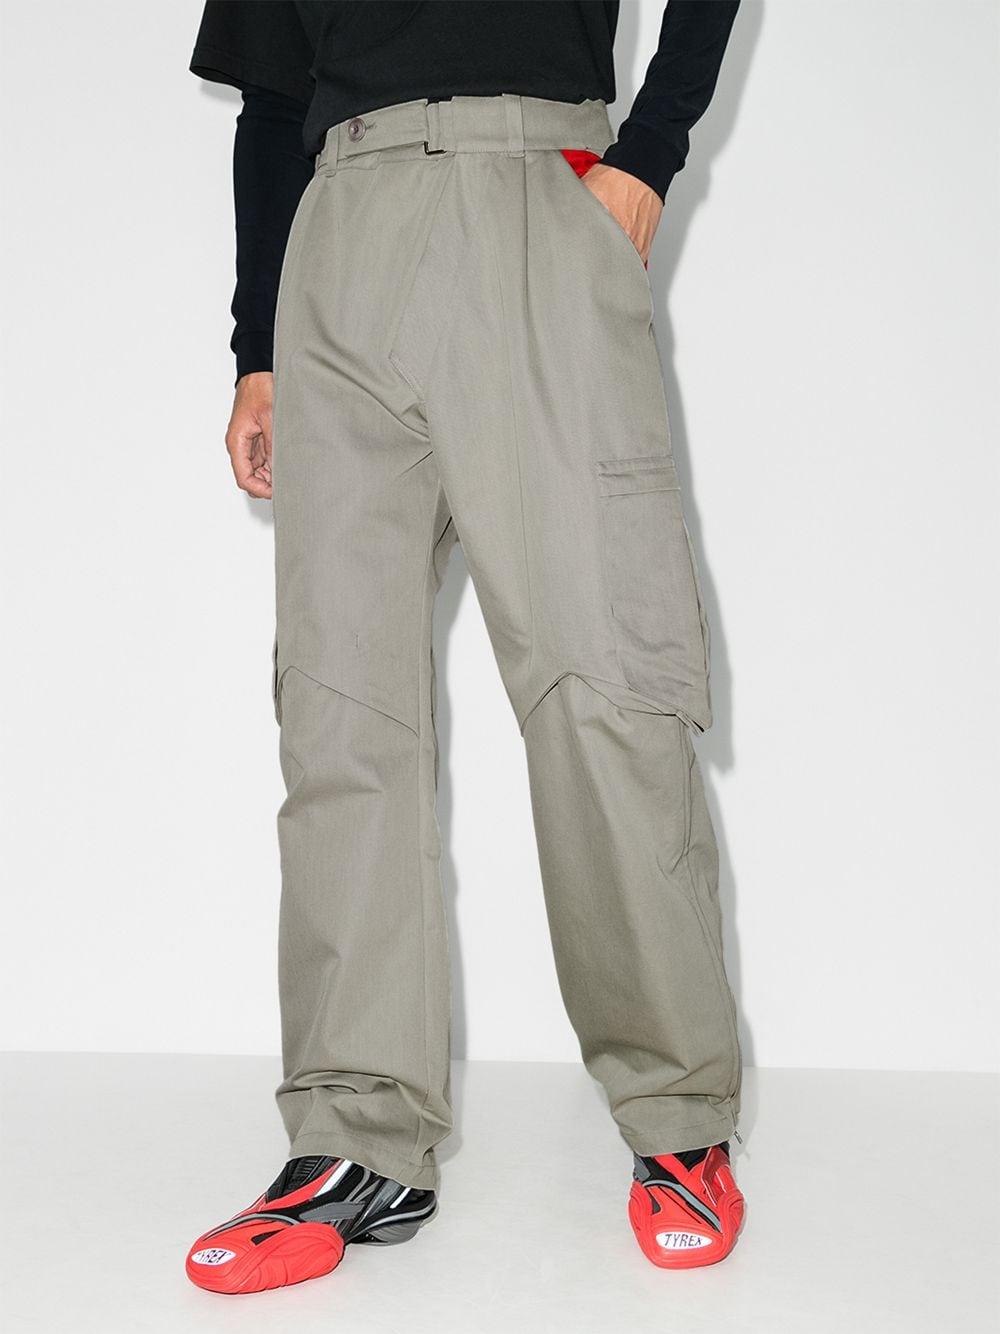 Kiko Kostadinov Synthetic Bindra Cargo Trousers in Grey (Gray) for 